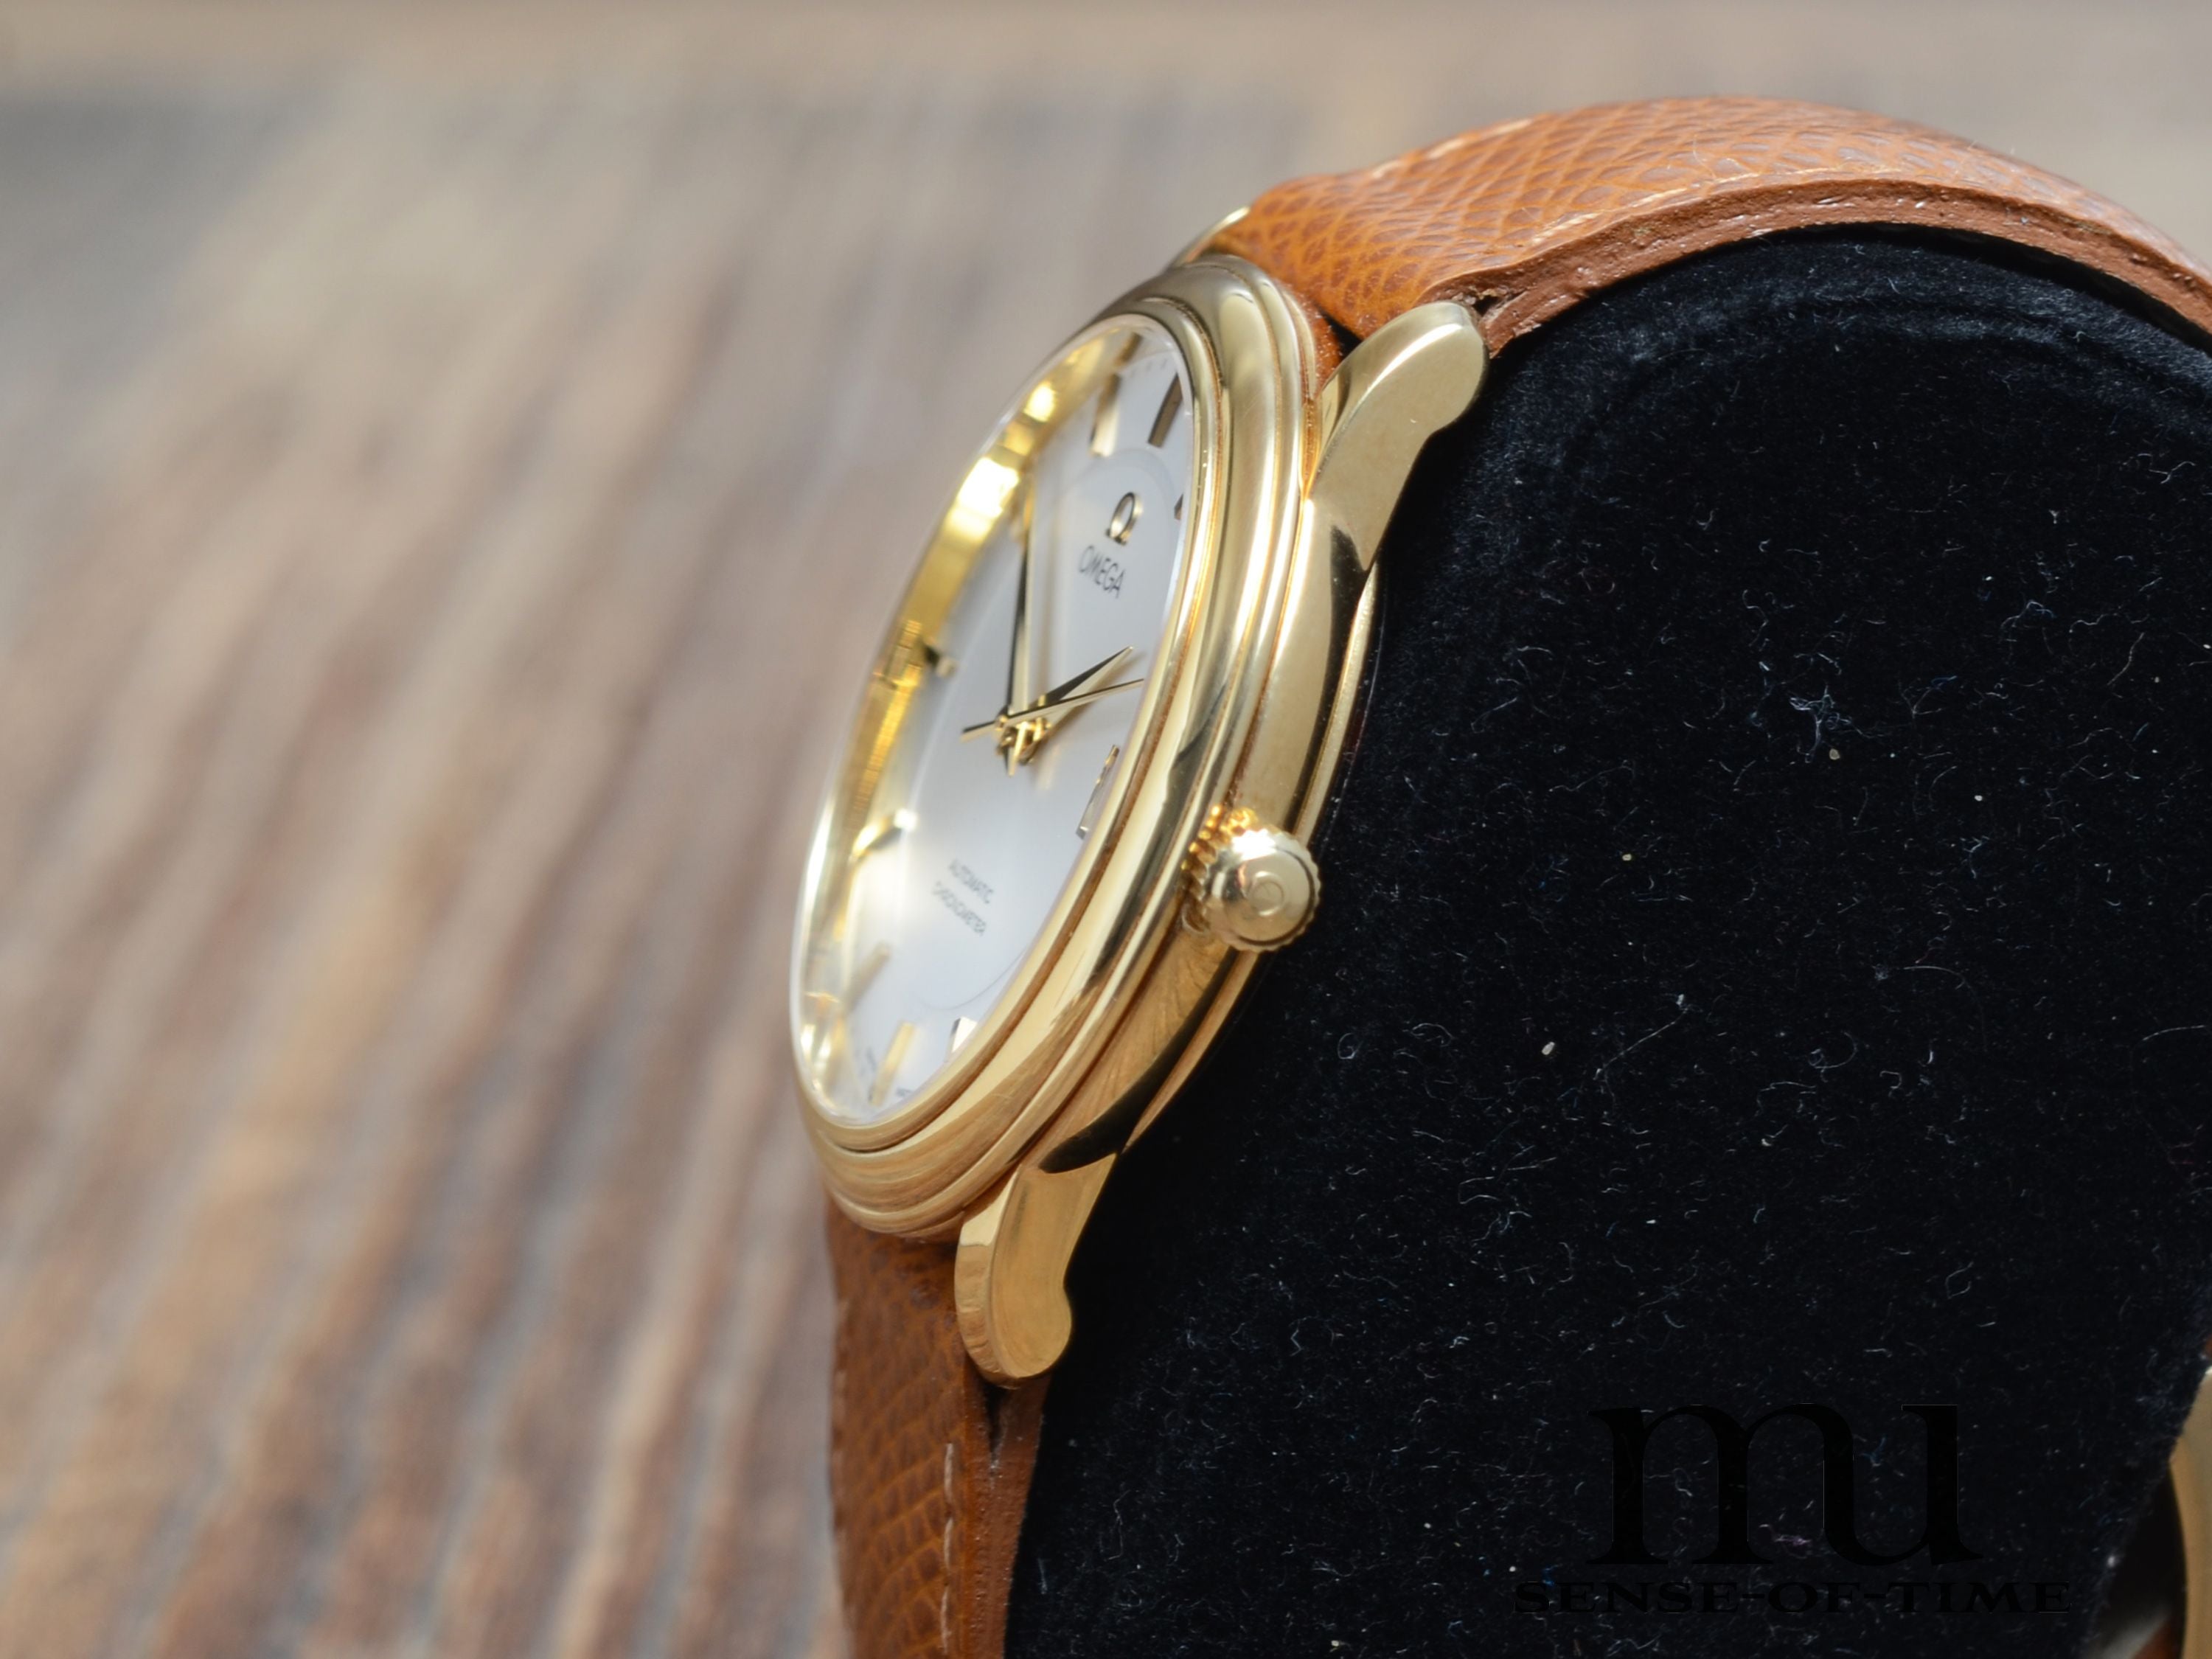 Omega deVille Prestige 18kt Gold Automatic Chronometer